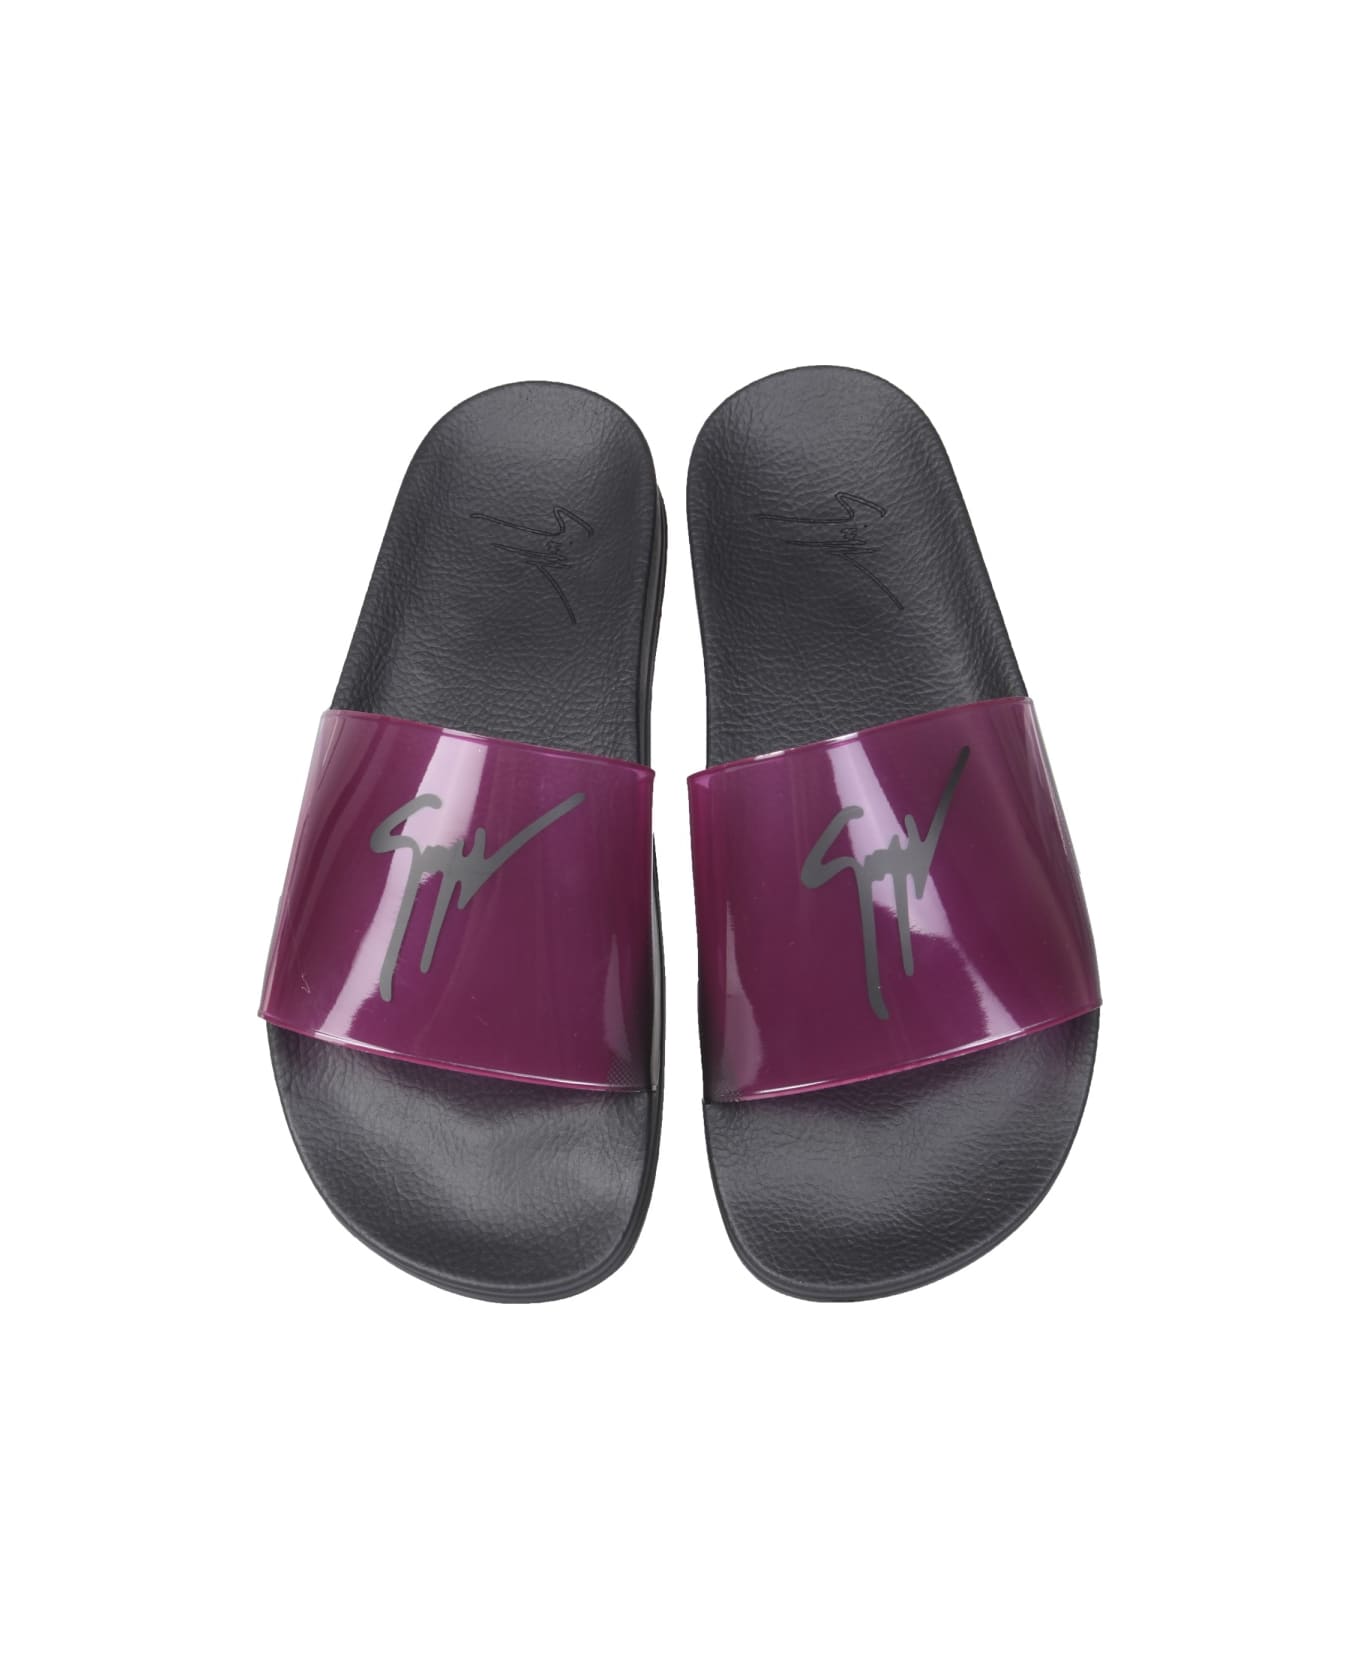 Giuseppe Zanotti Slide Sandals With Logo - FUCHSIA サンダル